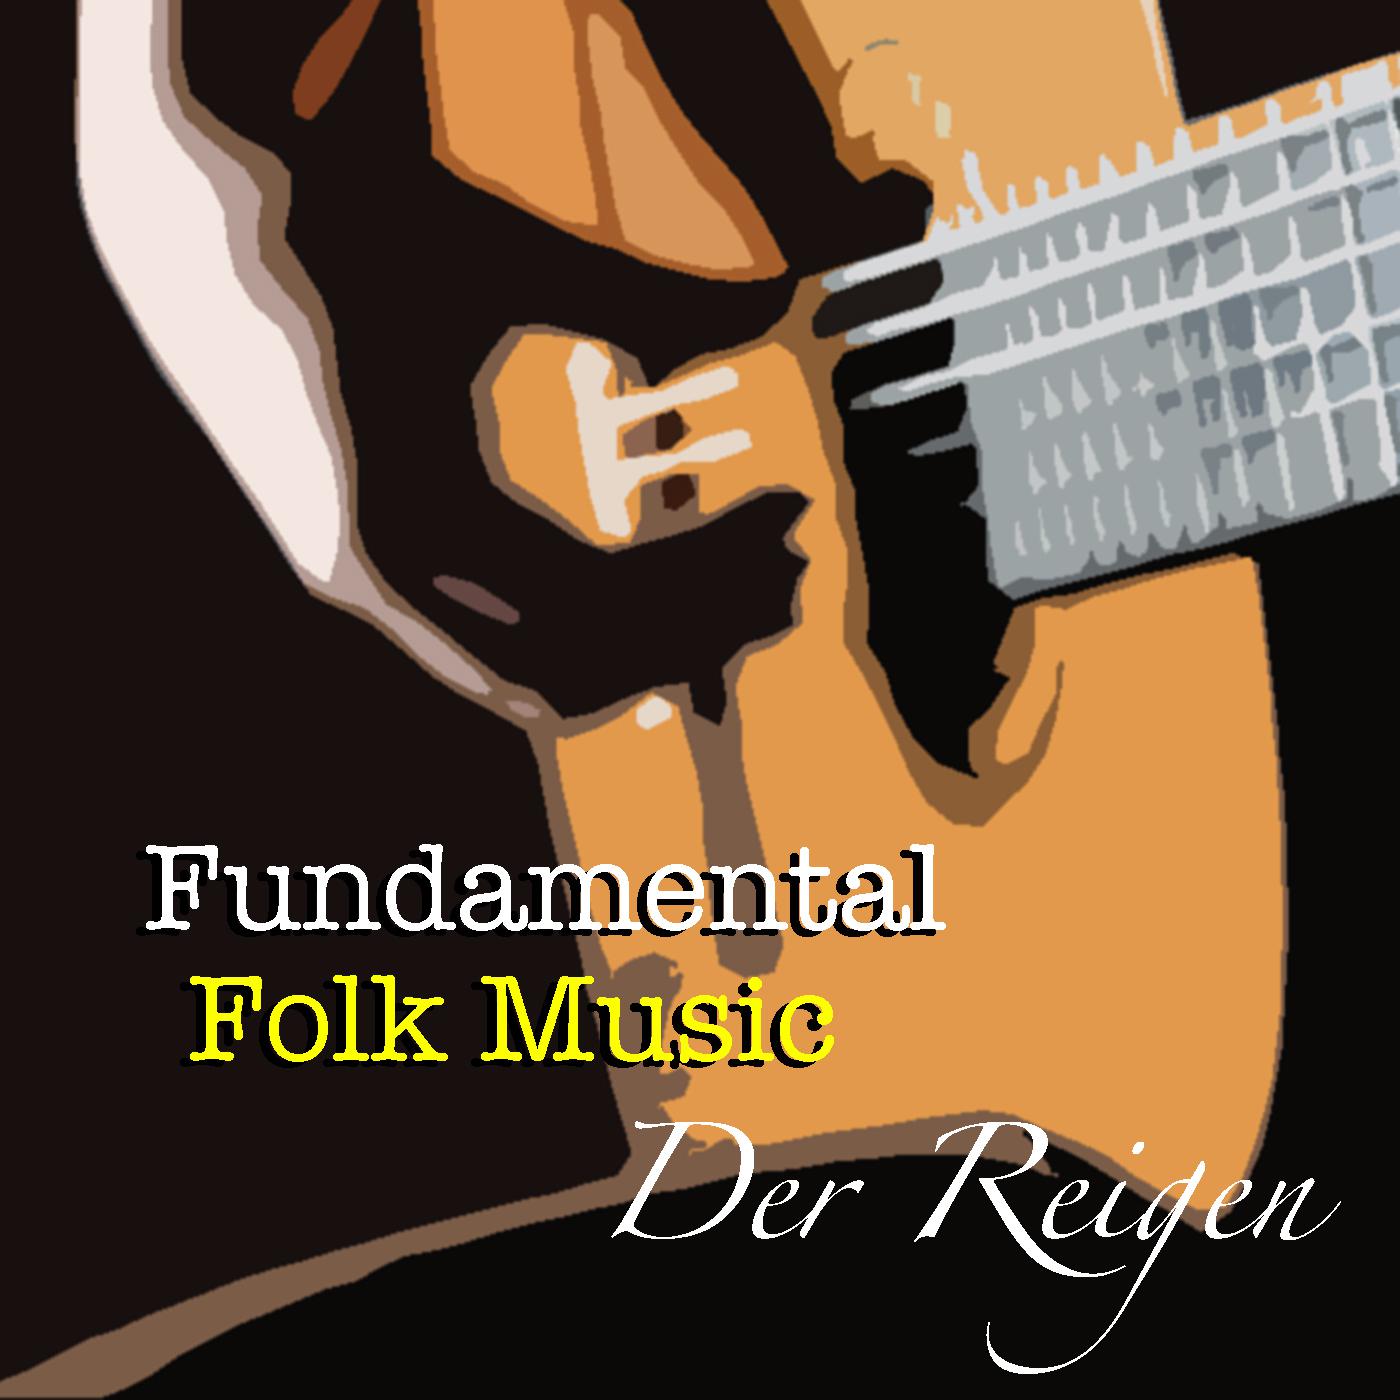 Der Reigen Fundamental Folk Music